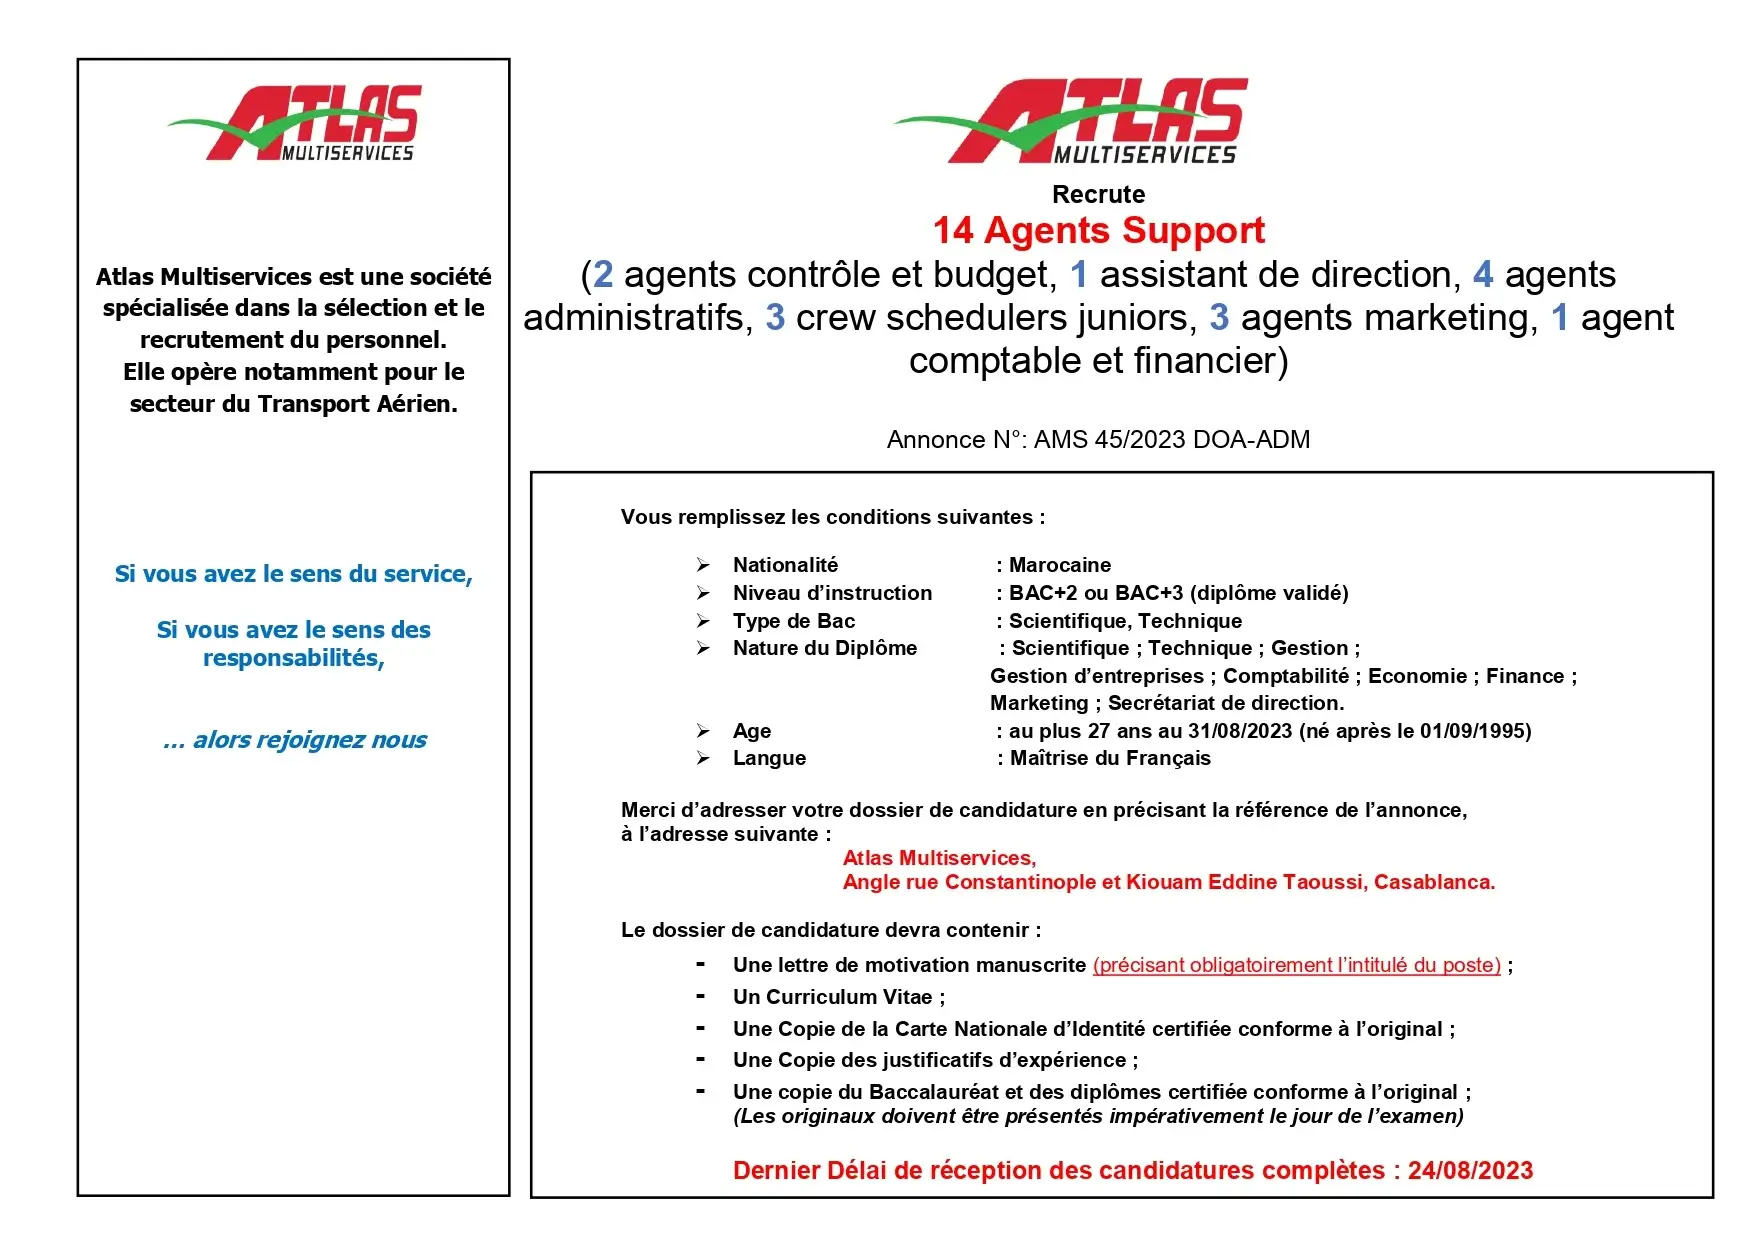 Atlas Multiservices recrute des Agents Support (14 postes)